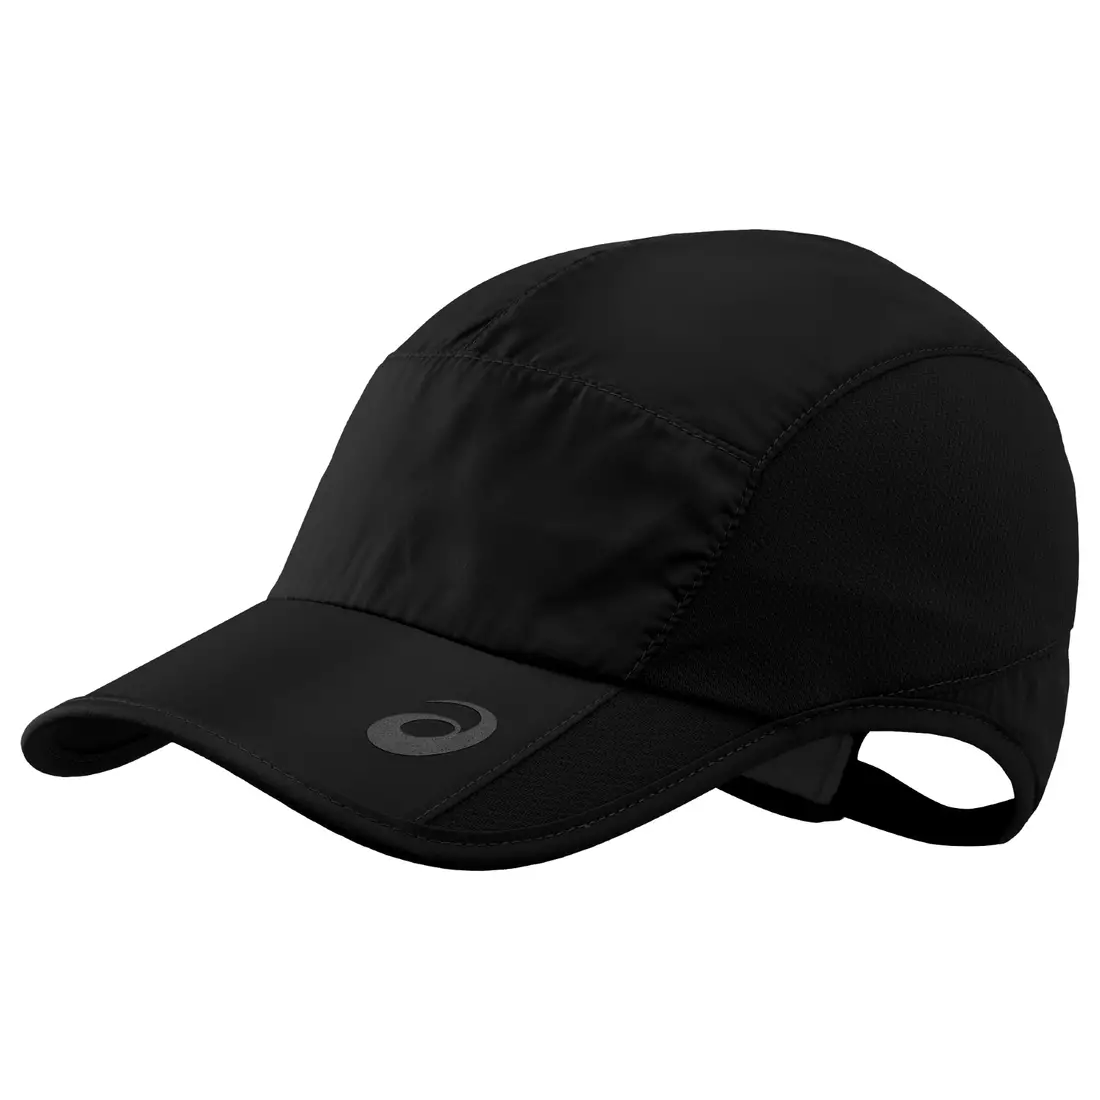 ASICS SS17 PERFORMANCE baseball cap BLACK 132059 904